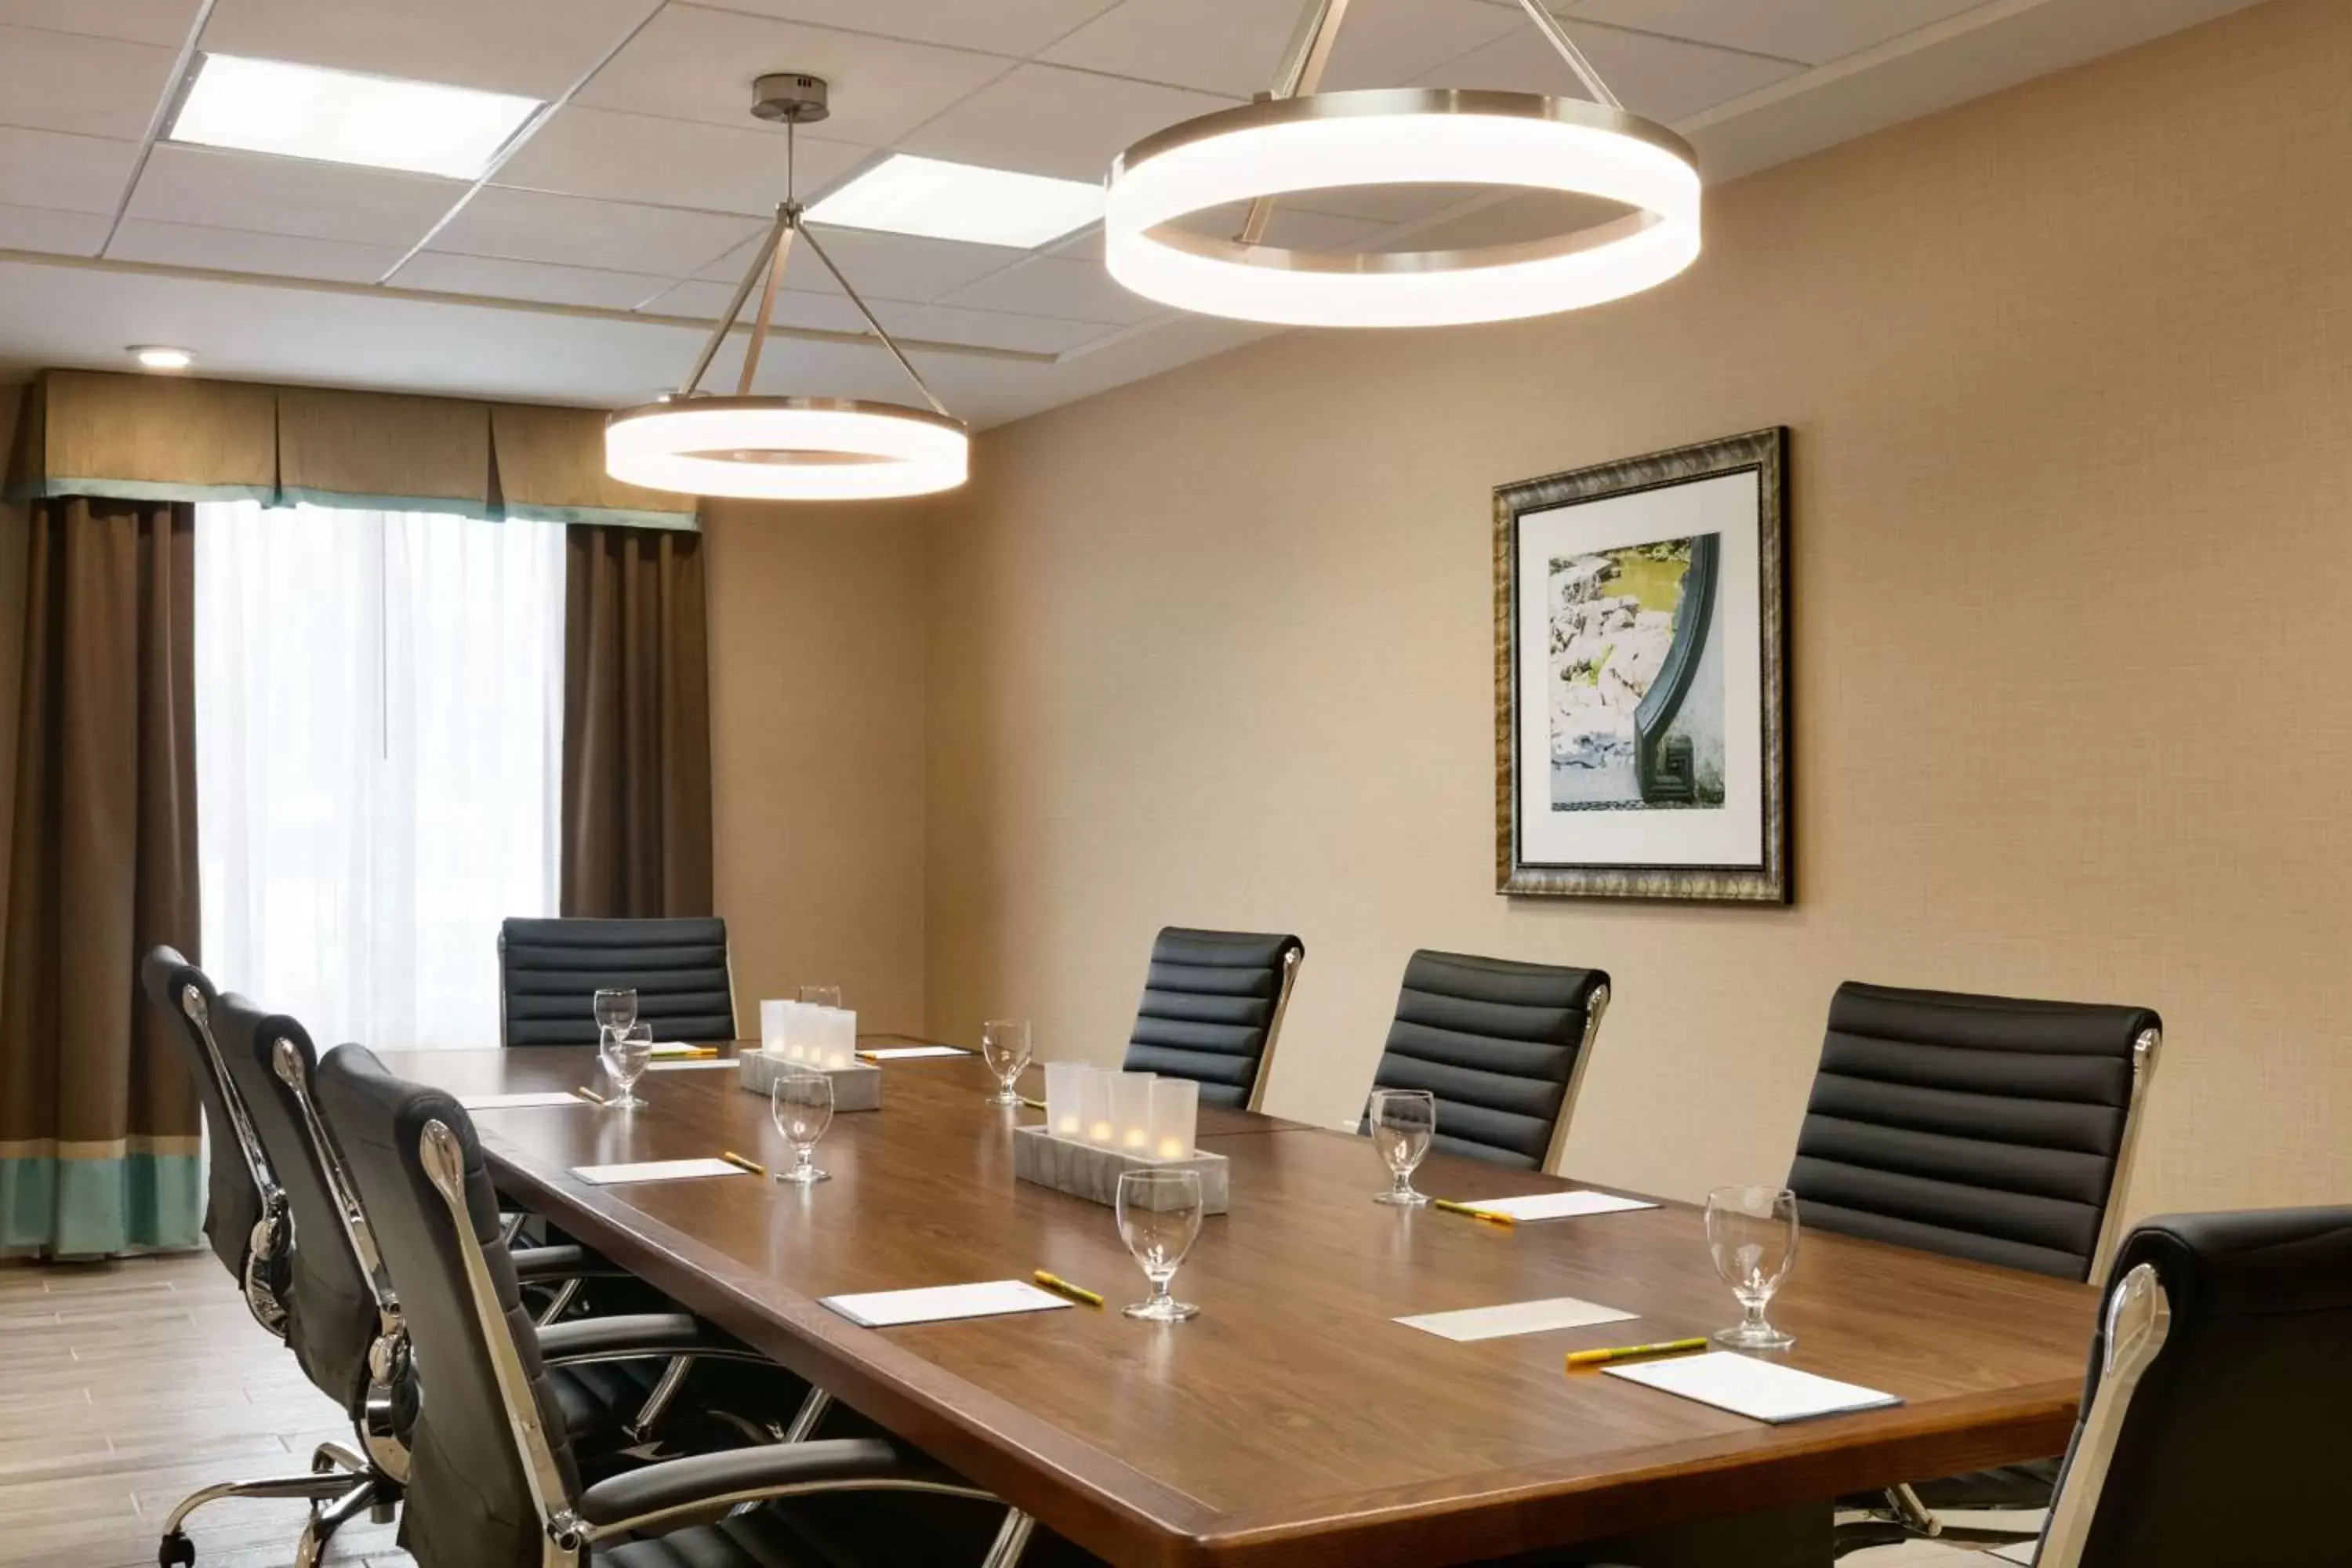 Meeting/conference room in Hilton Garden Inn Statesville